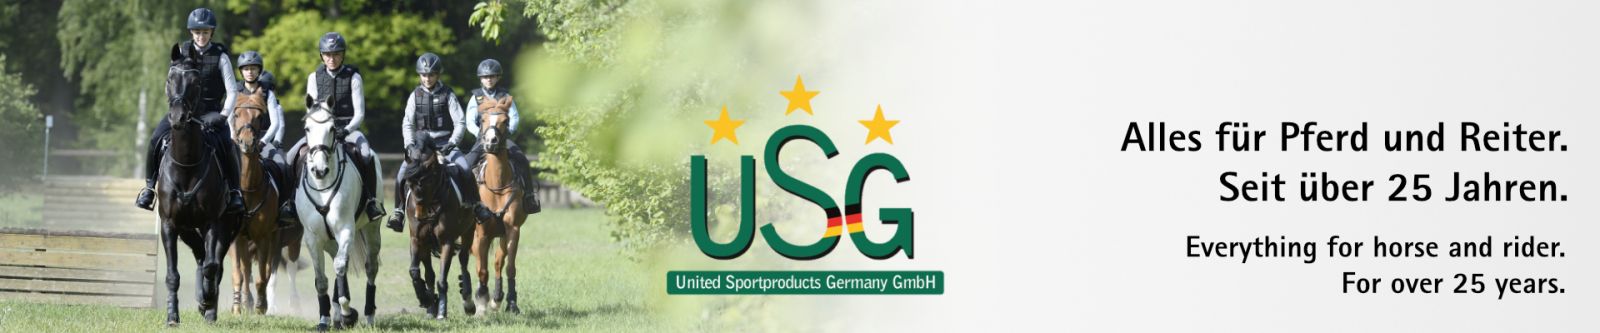 Brand Ambassadors & Cooperations - USG - United Sportproducts Germany GmbH